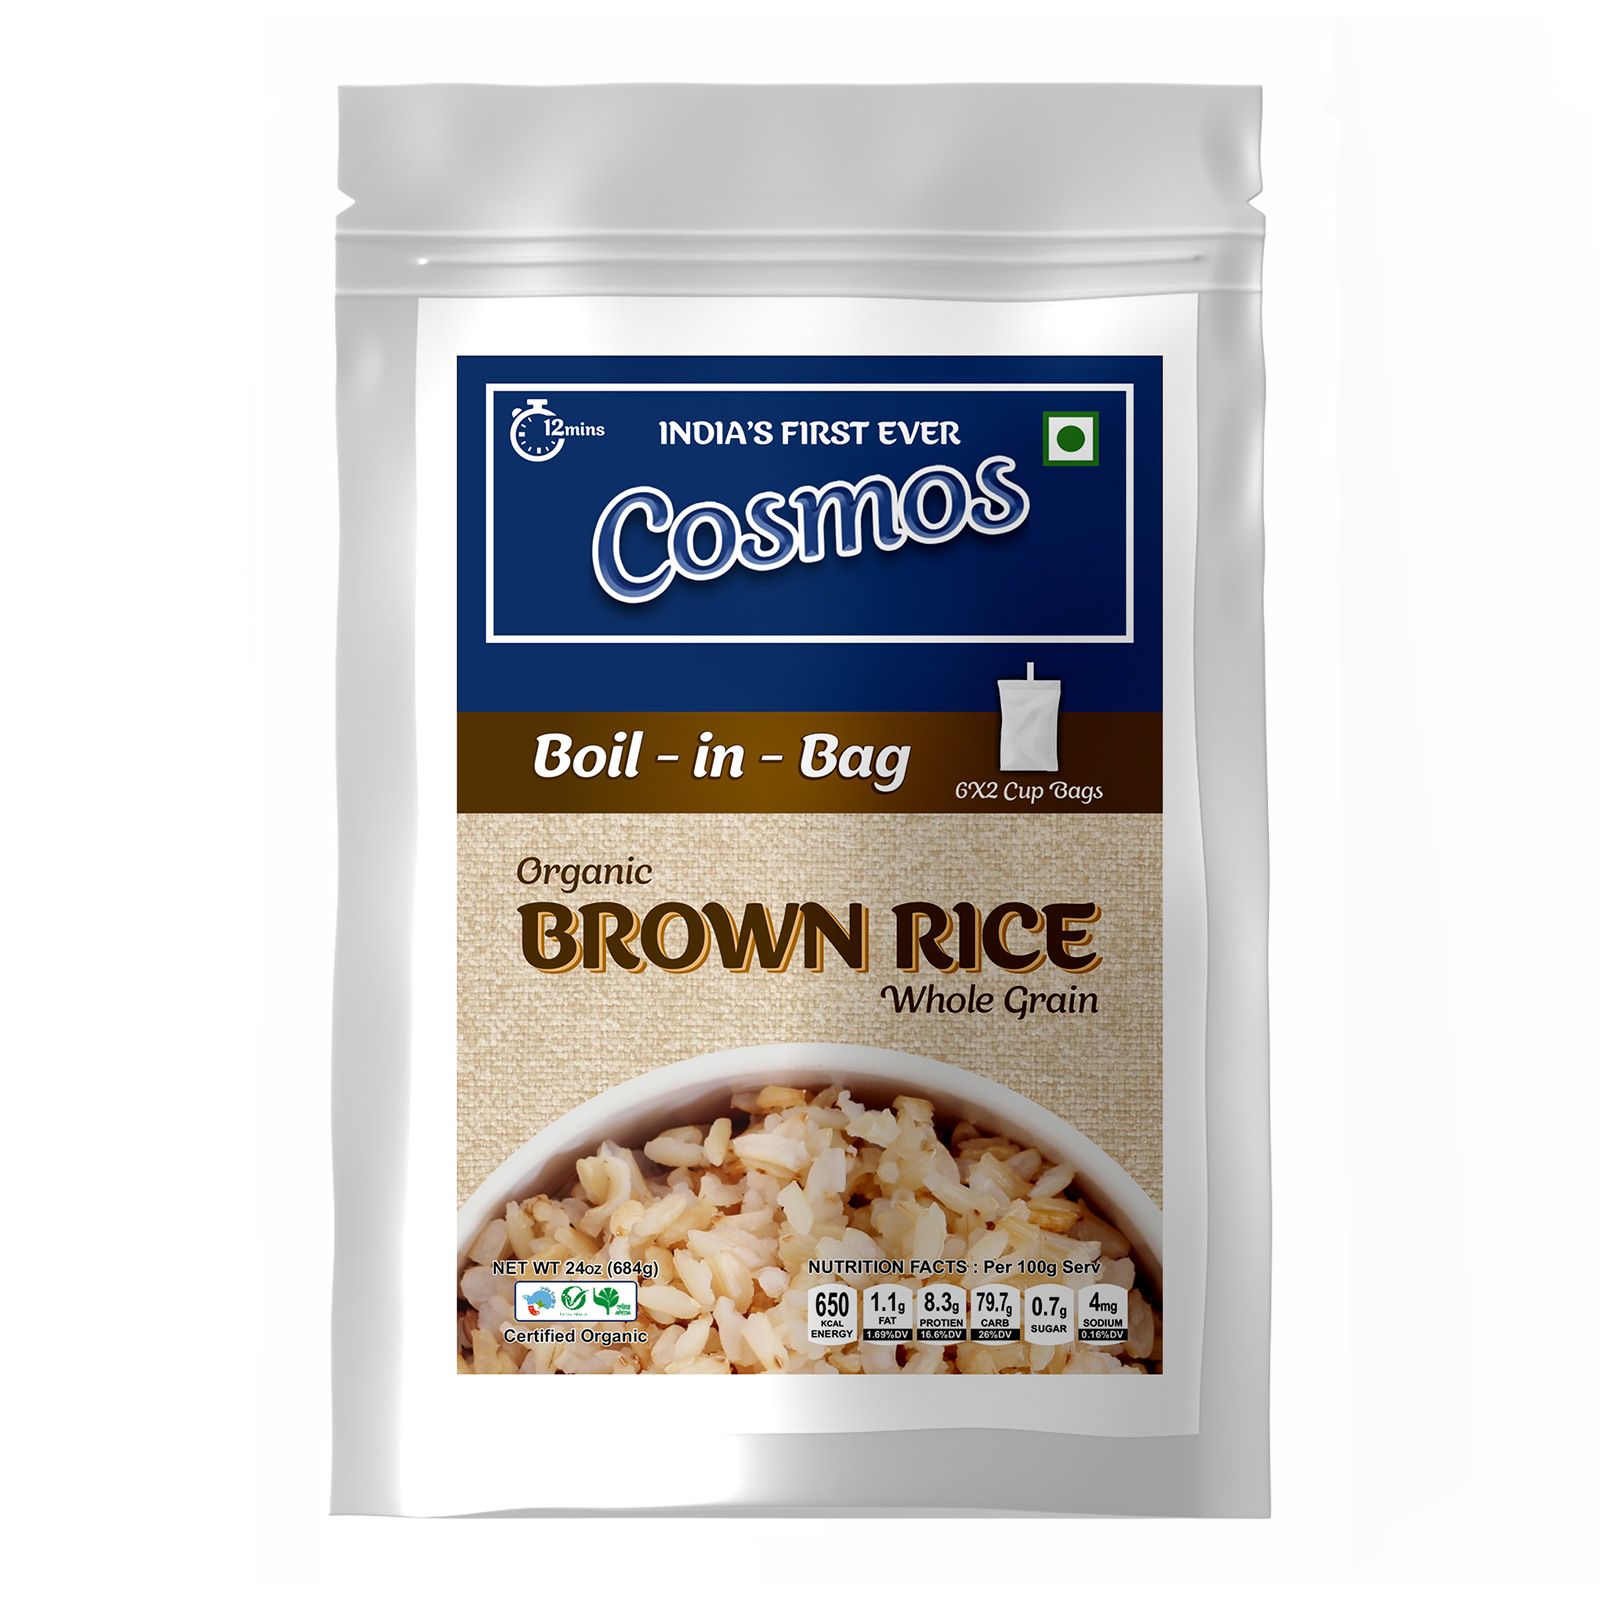 Cosmos Boil-in-Bag Organic Brown Rice (24oz) Ready-to-Cook Sona masuri Premium